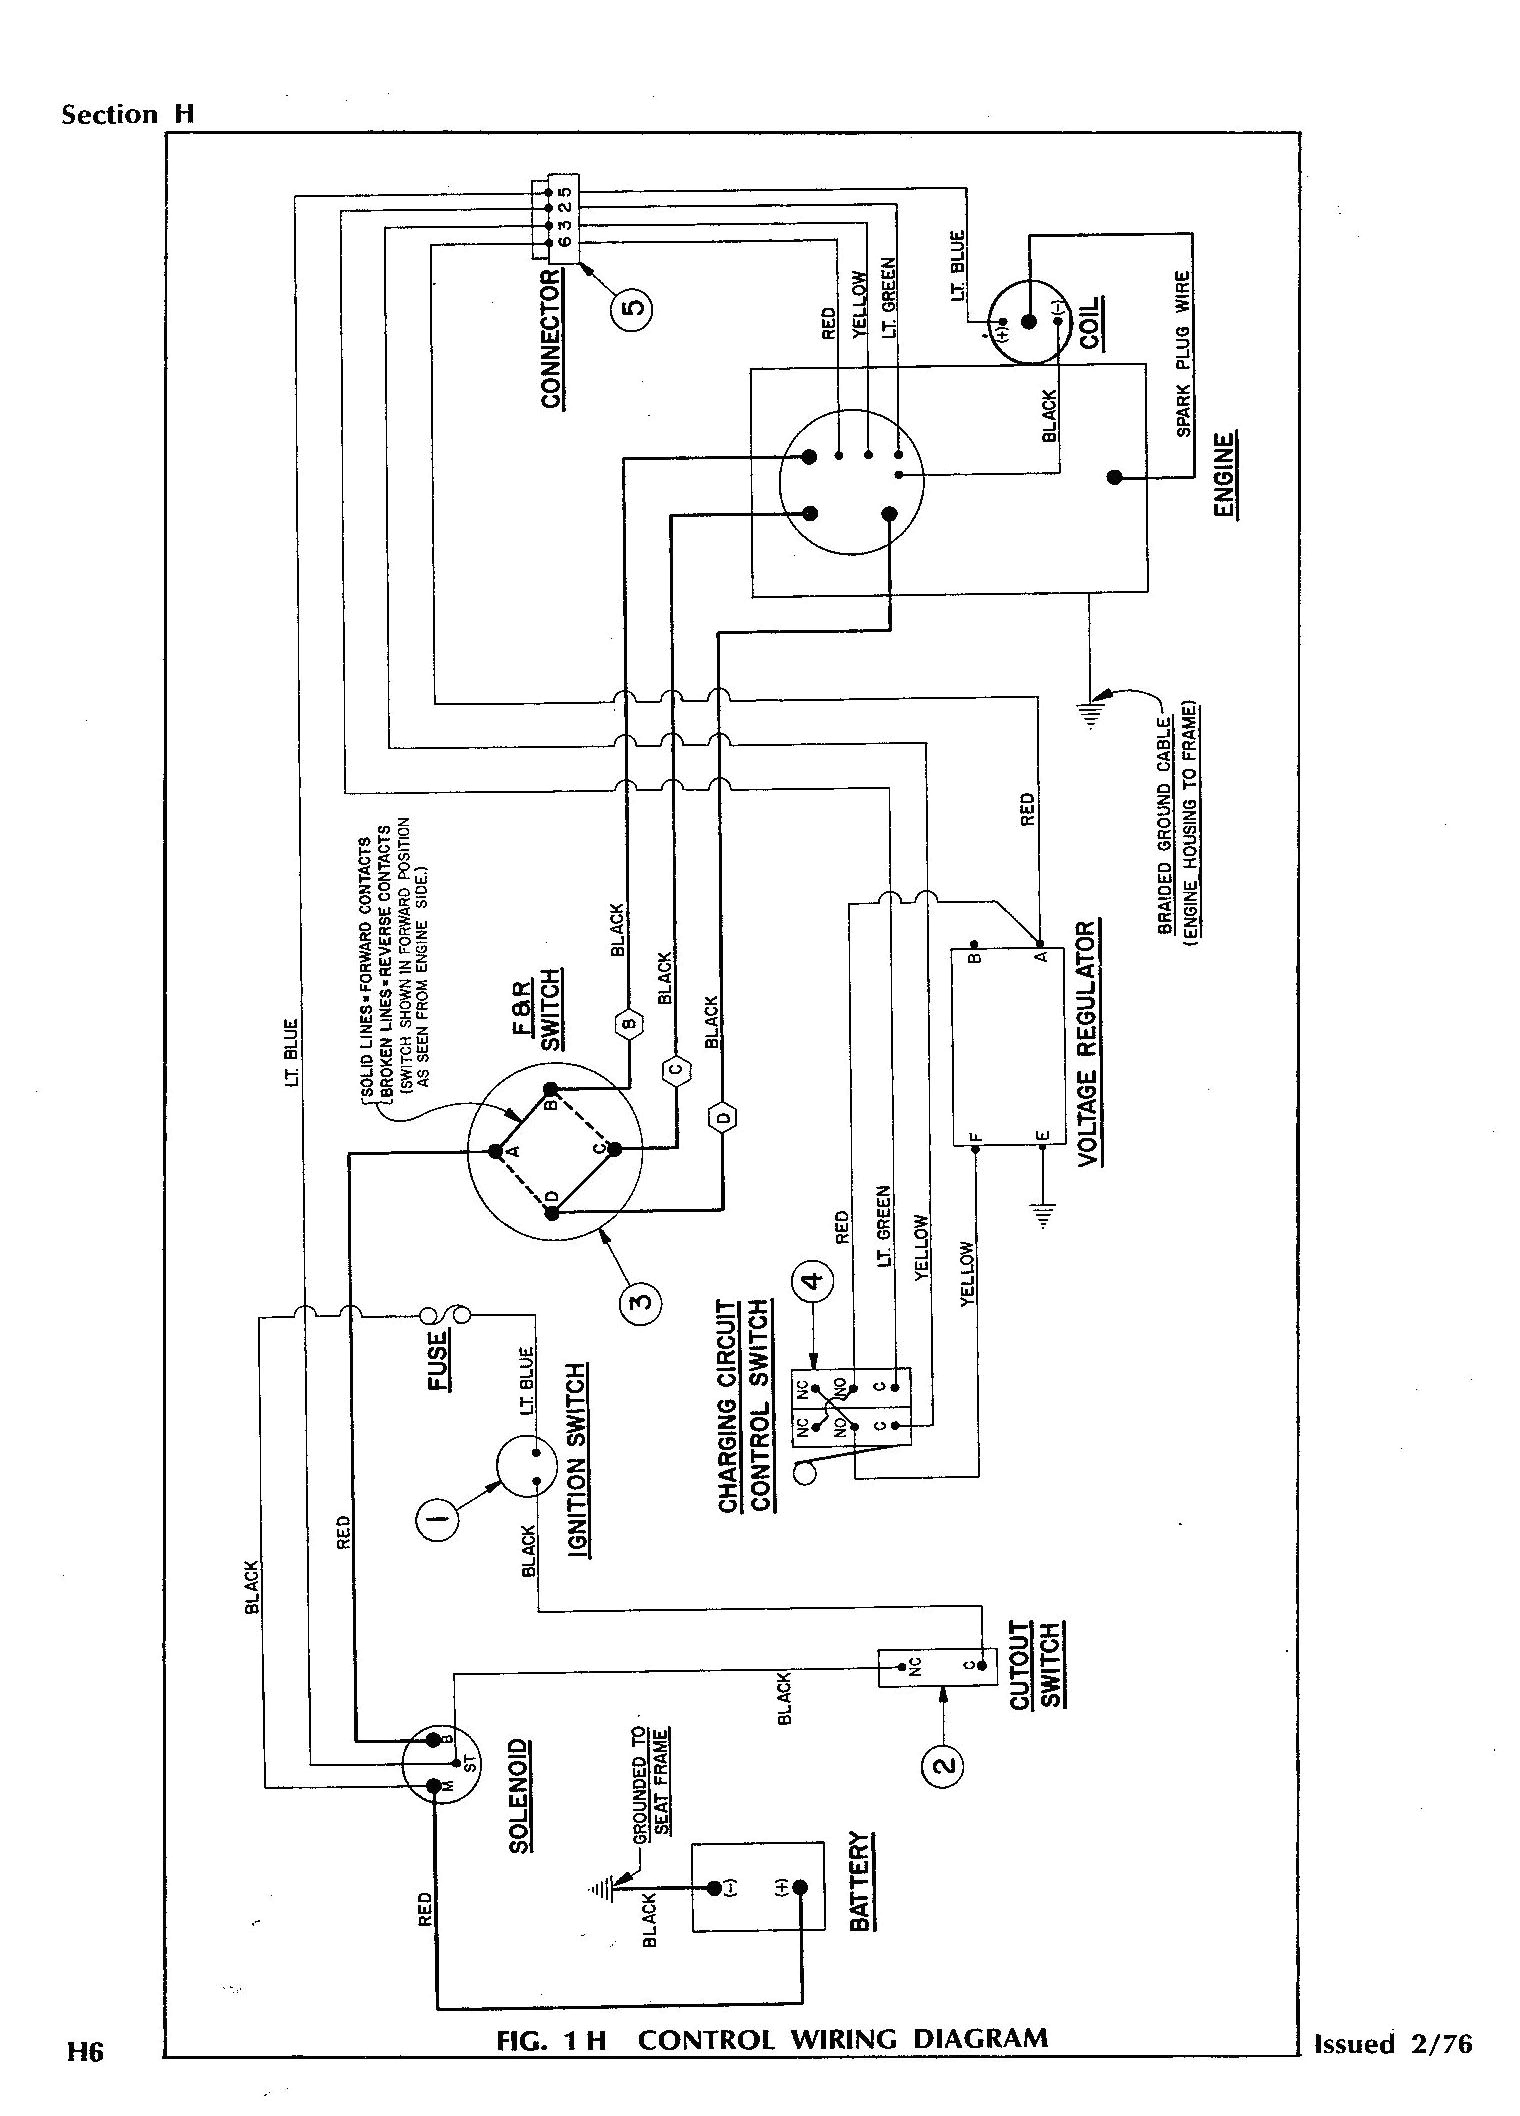 ez go golf cart wiring diagram gas engine ezgo gas golf cart wiring diagram with template diagrams 4a jpg